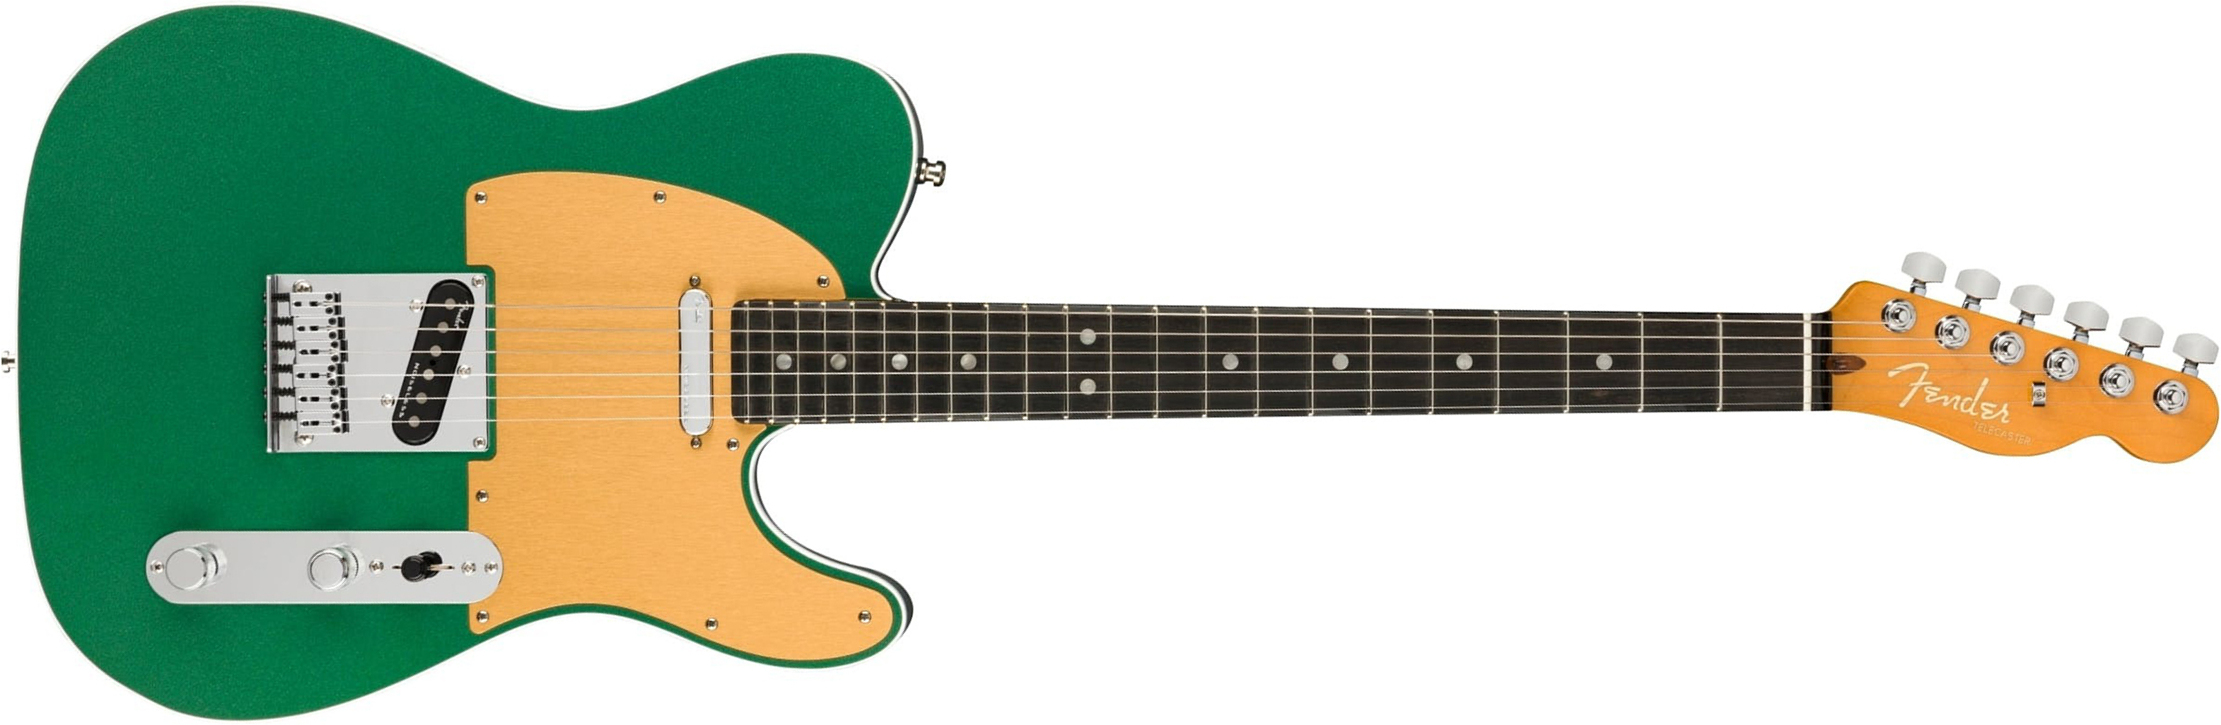 Fender Tele American Ultra Fsr Ltd Usa 2s Ht Eb - Mystic Pine Green - Guitare Électrique Forme Tel - Main picture